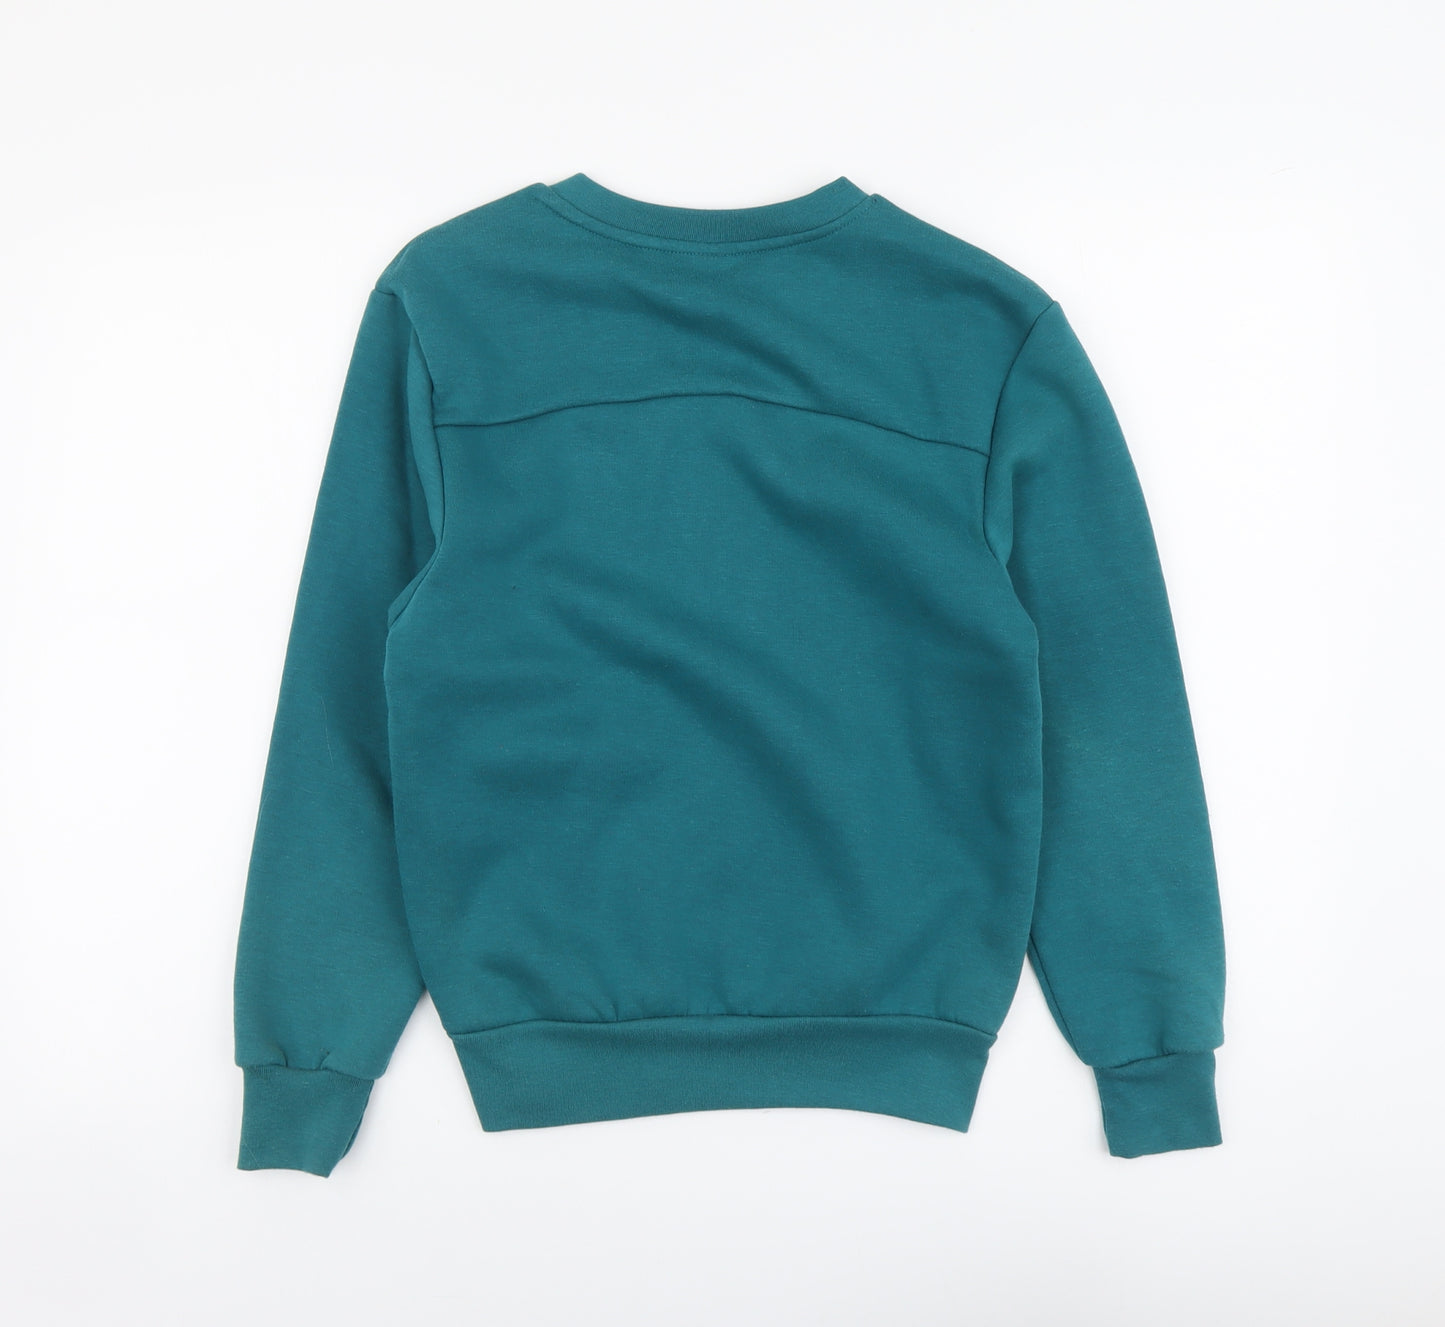 Slazenger Boys Green Polyester Pullover Sweatshirt Size 9-10 Years Pullover